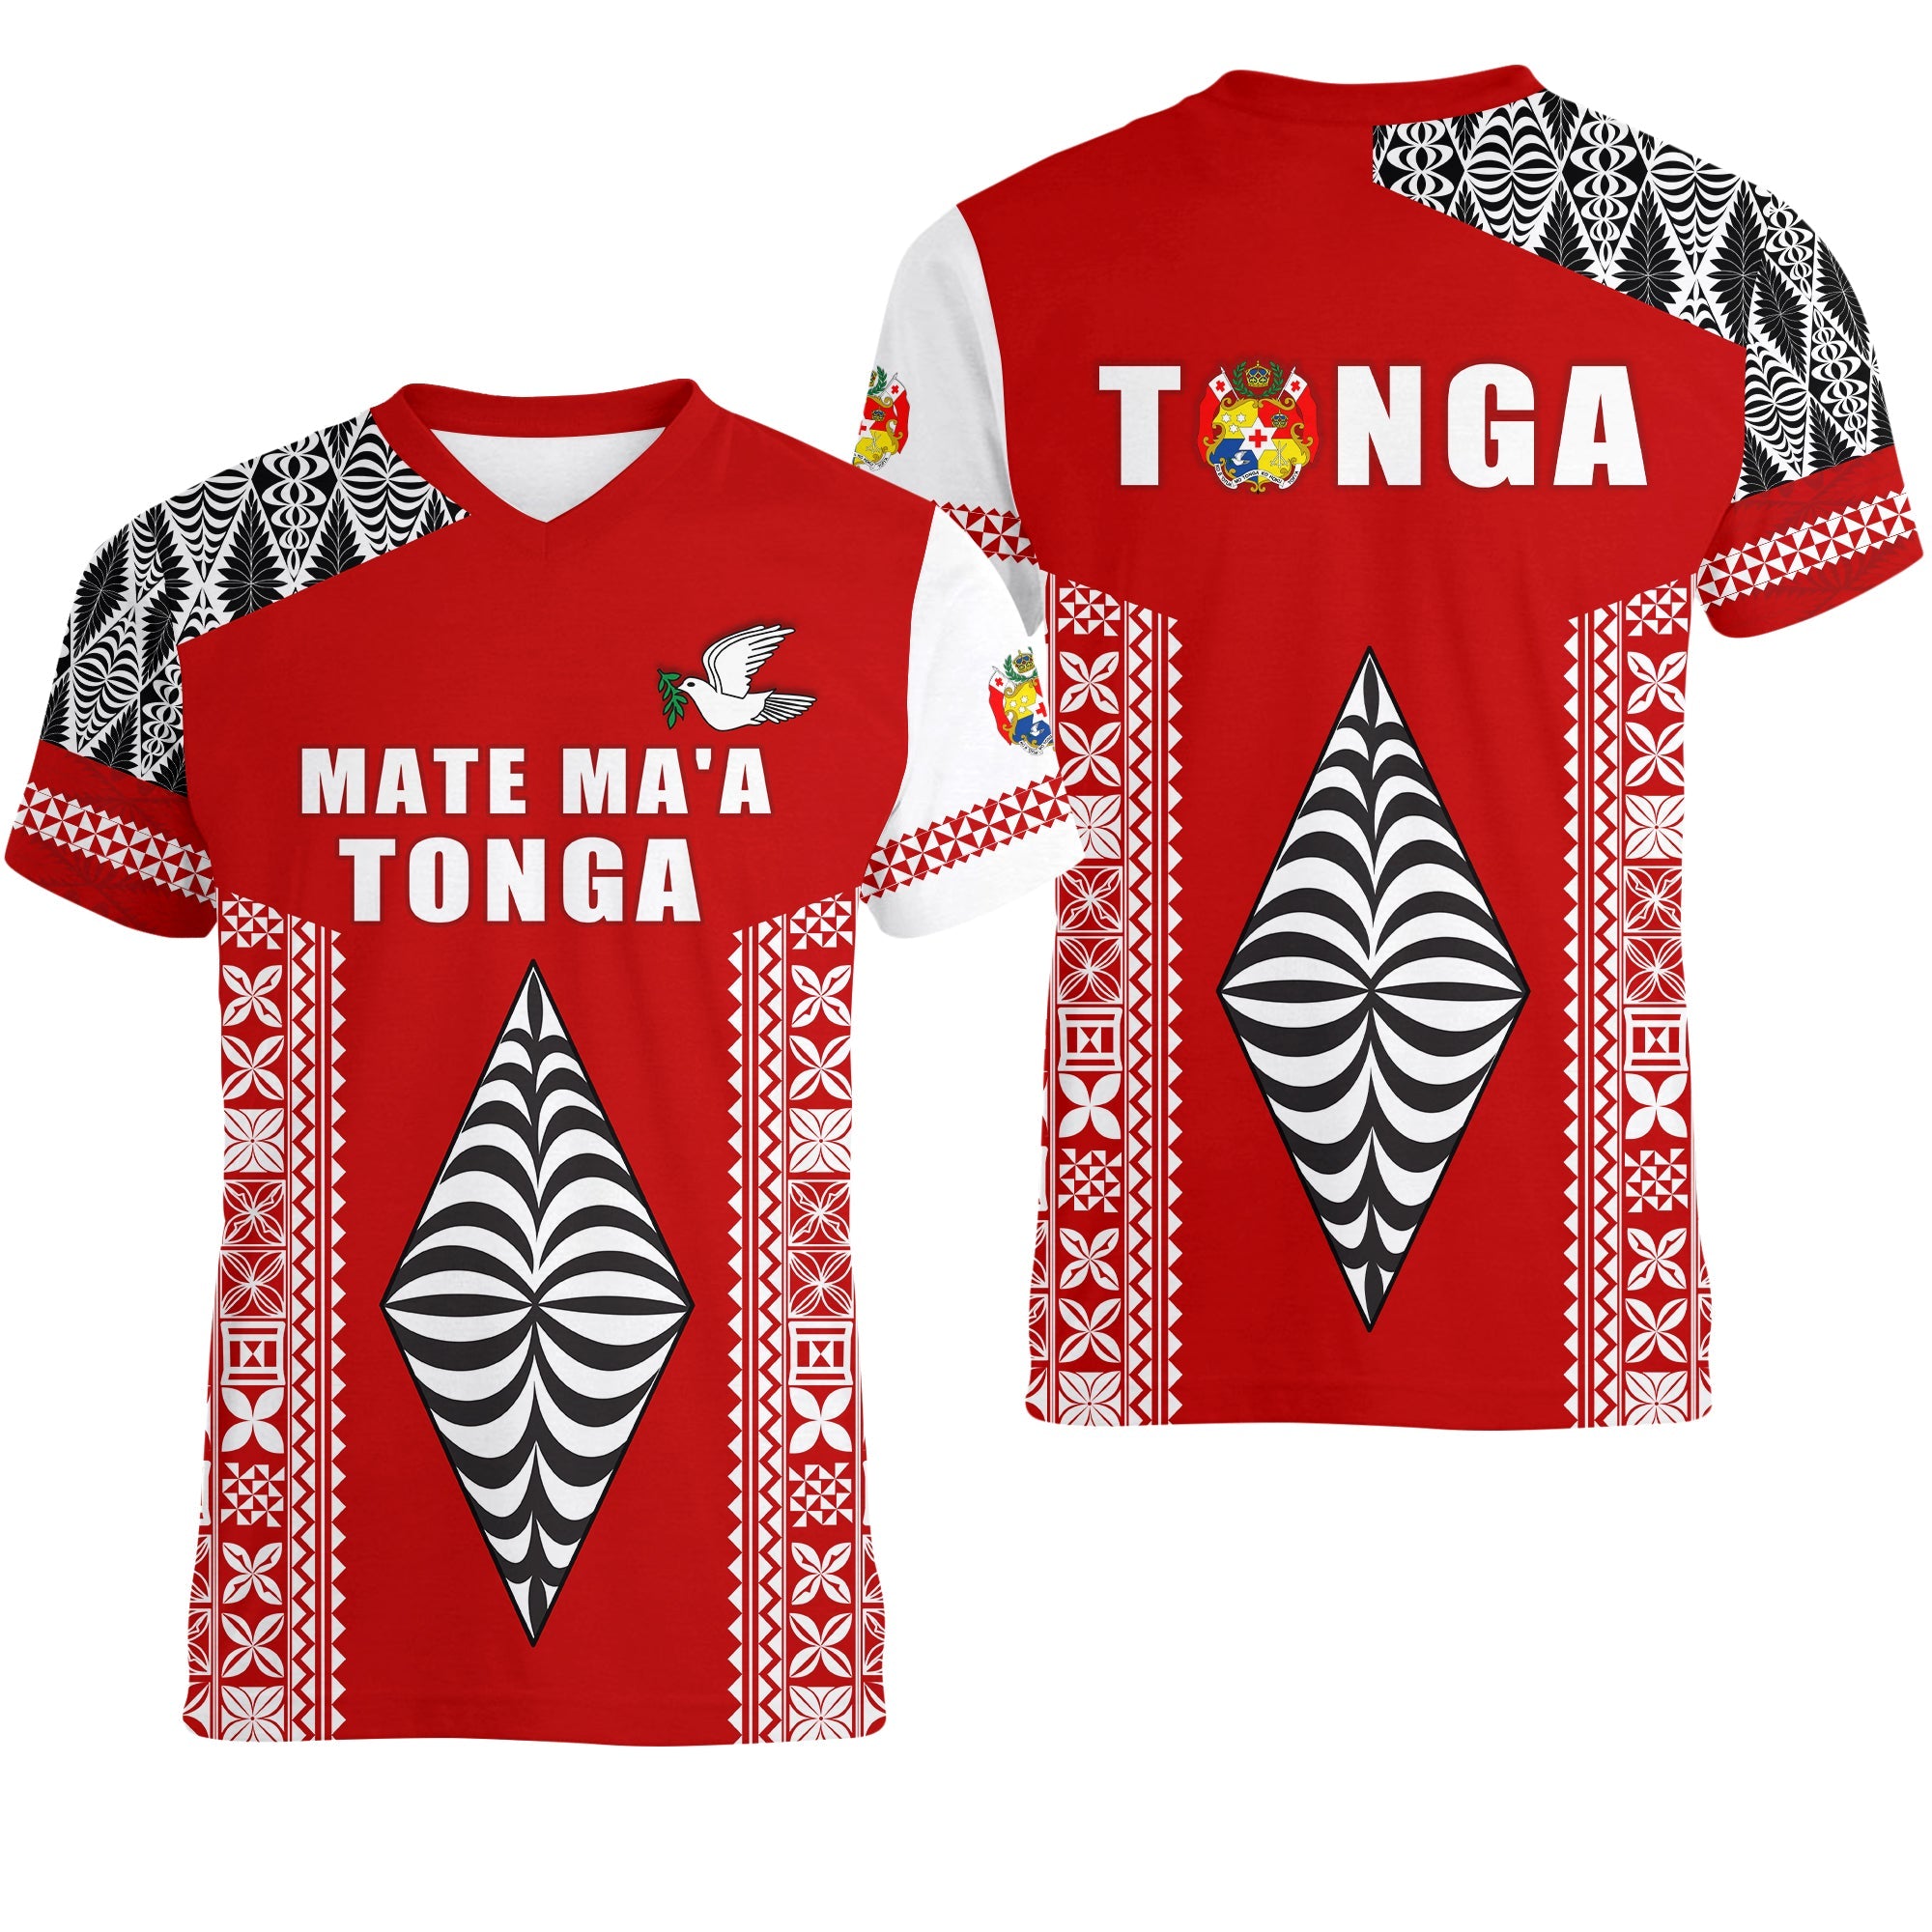 Tonga Rugby V neck T Shirt Mate Maa Tonga LT13 Red - Polynesian Pride